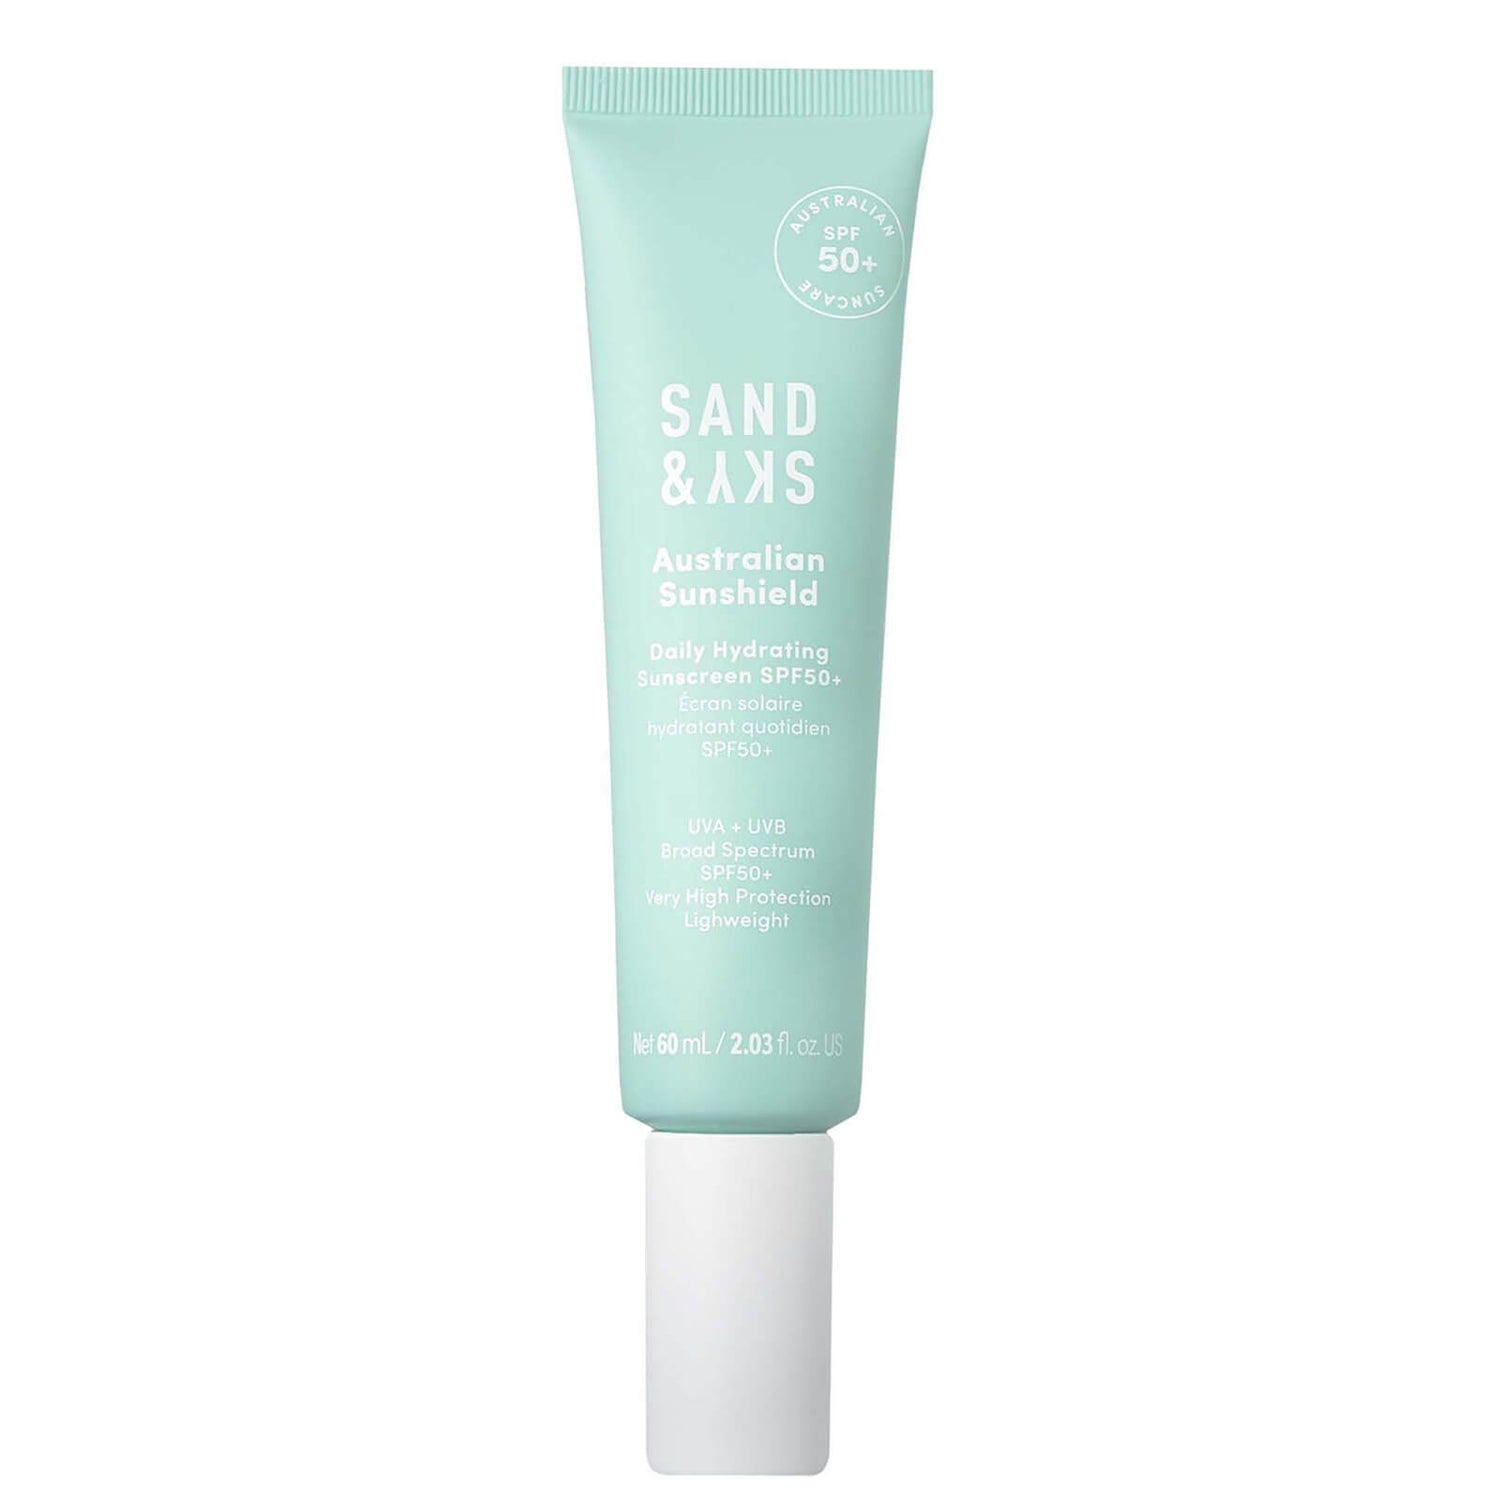 Sand & Sky Daily Hydrating Sunscreen SPF50 60ml